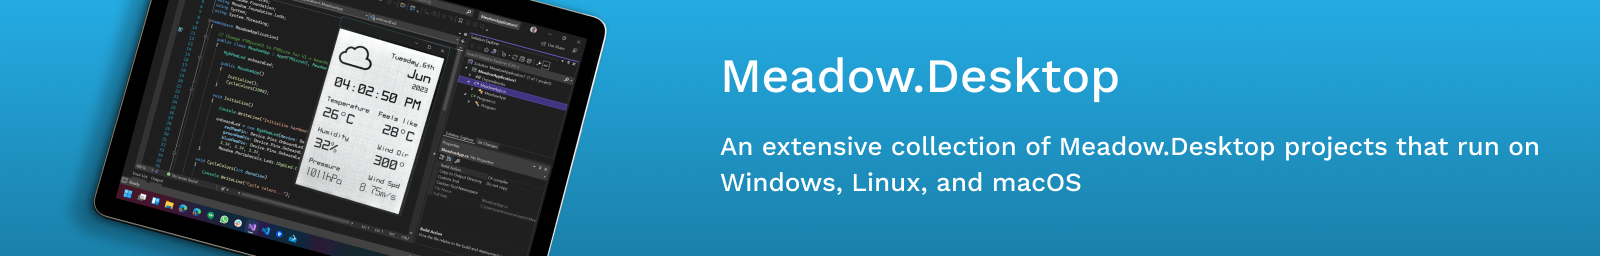 Meadow.Desktop.Samples